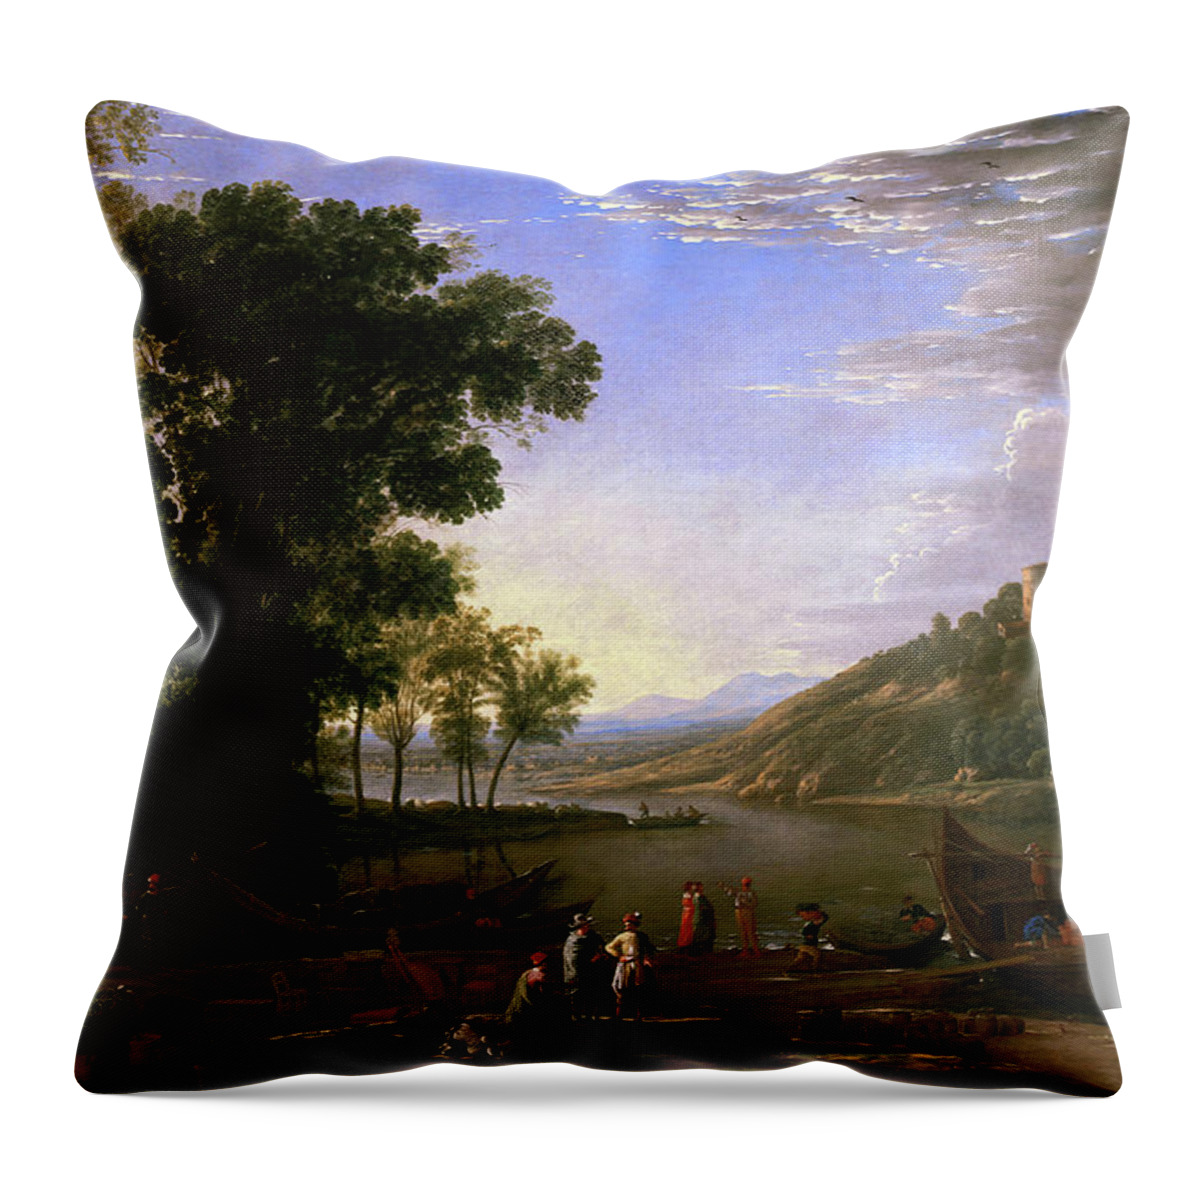 Landscape With Merchants Throw Pillow featuring the painting Landscape with Merchants by Claude Lorrain by Rolando Burbon